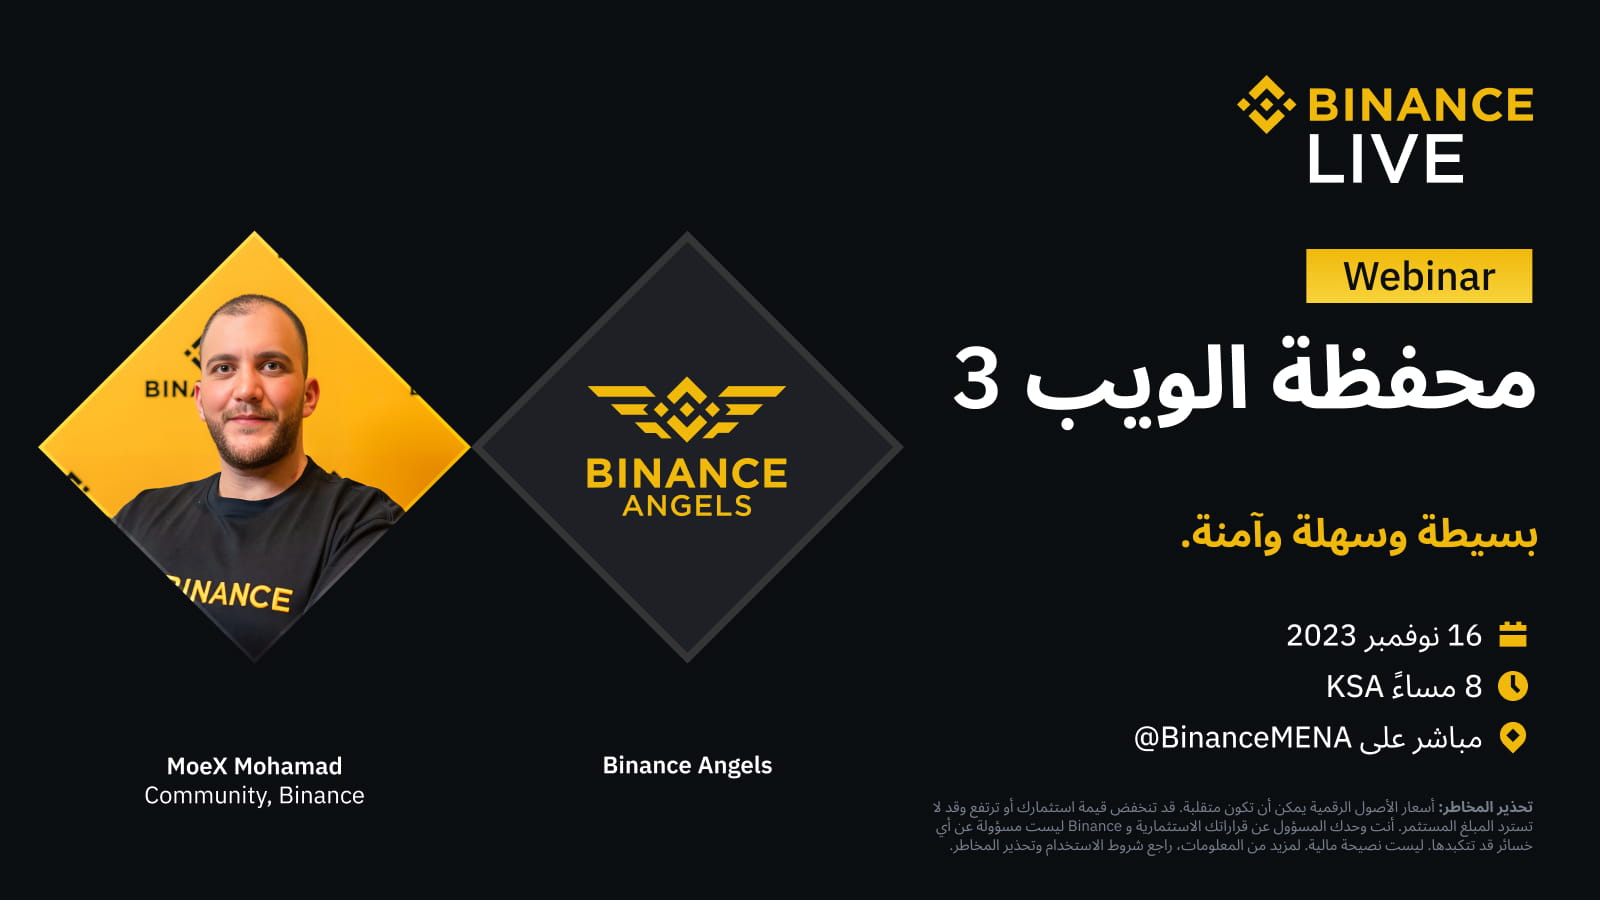 Meet the brand new #Binance Web3 Wallet!